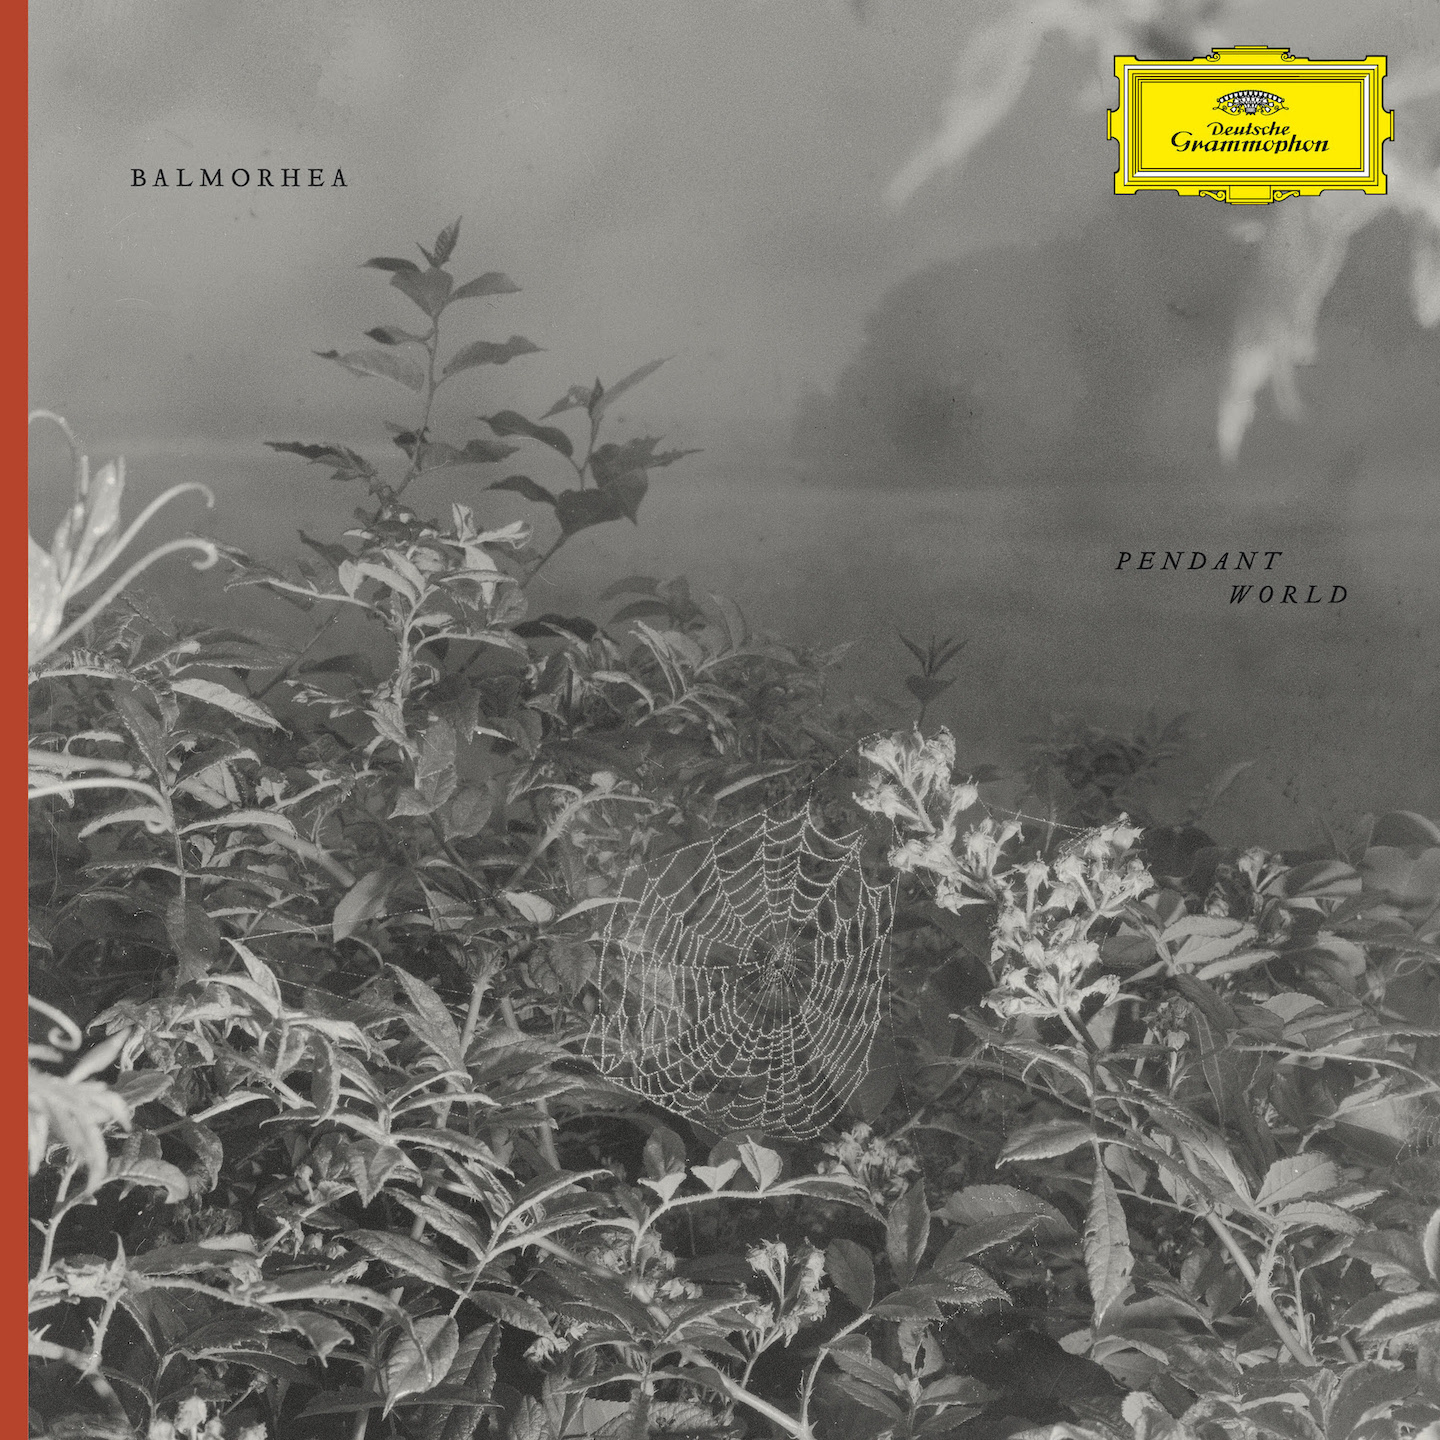 The album cover of Balmorhea album Pendant World on Deutsche Grammophon